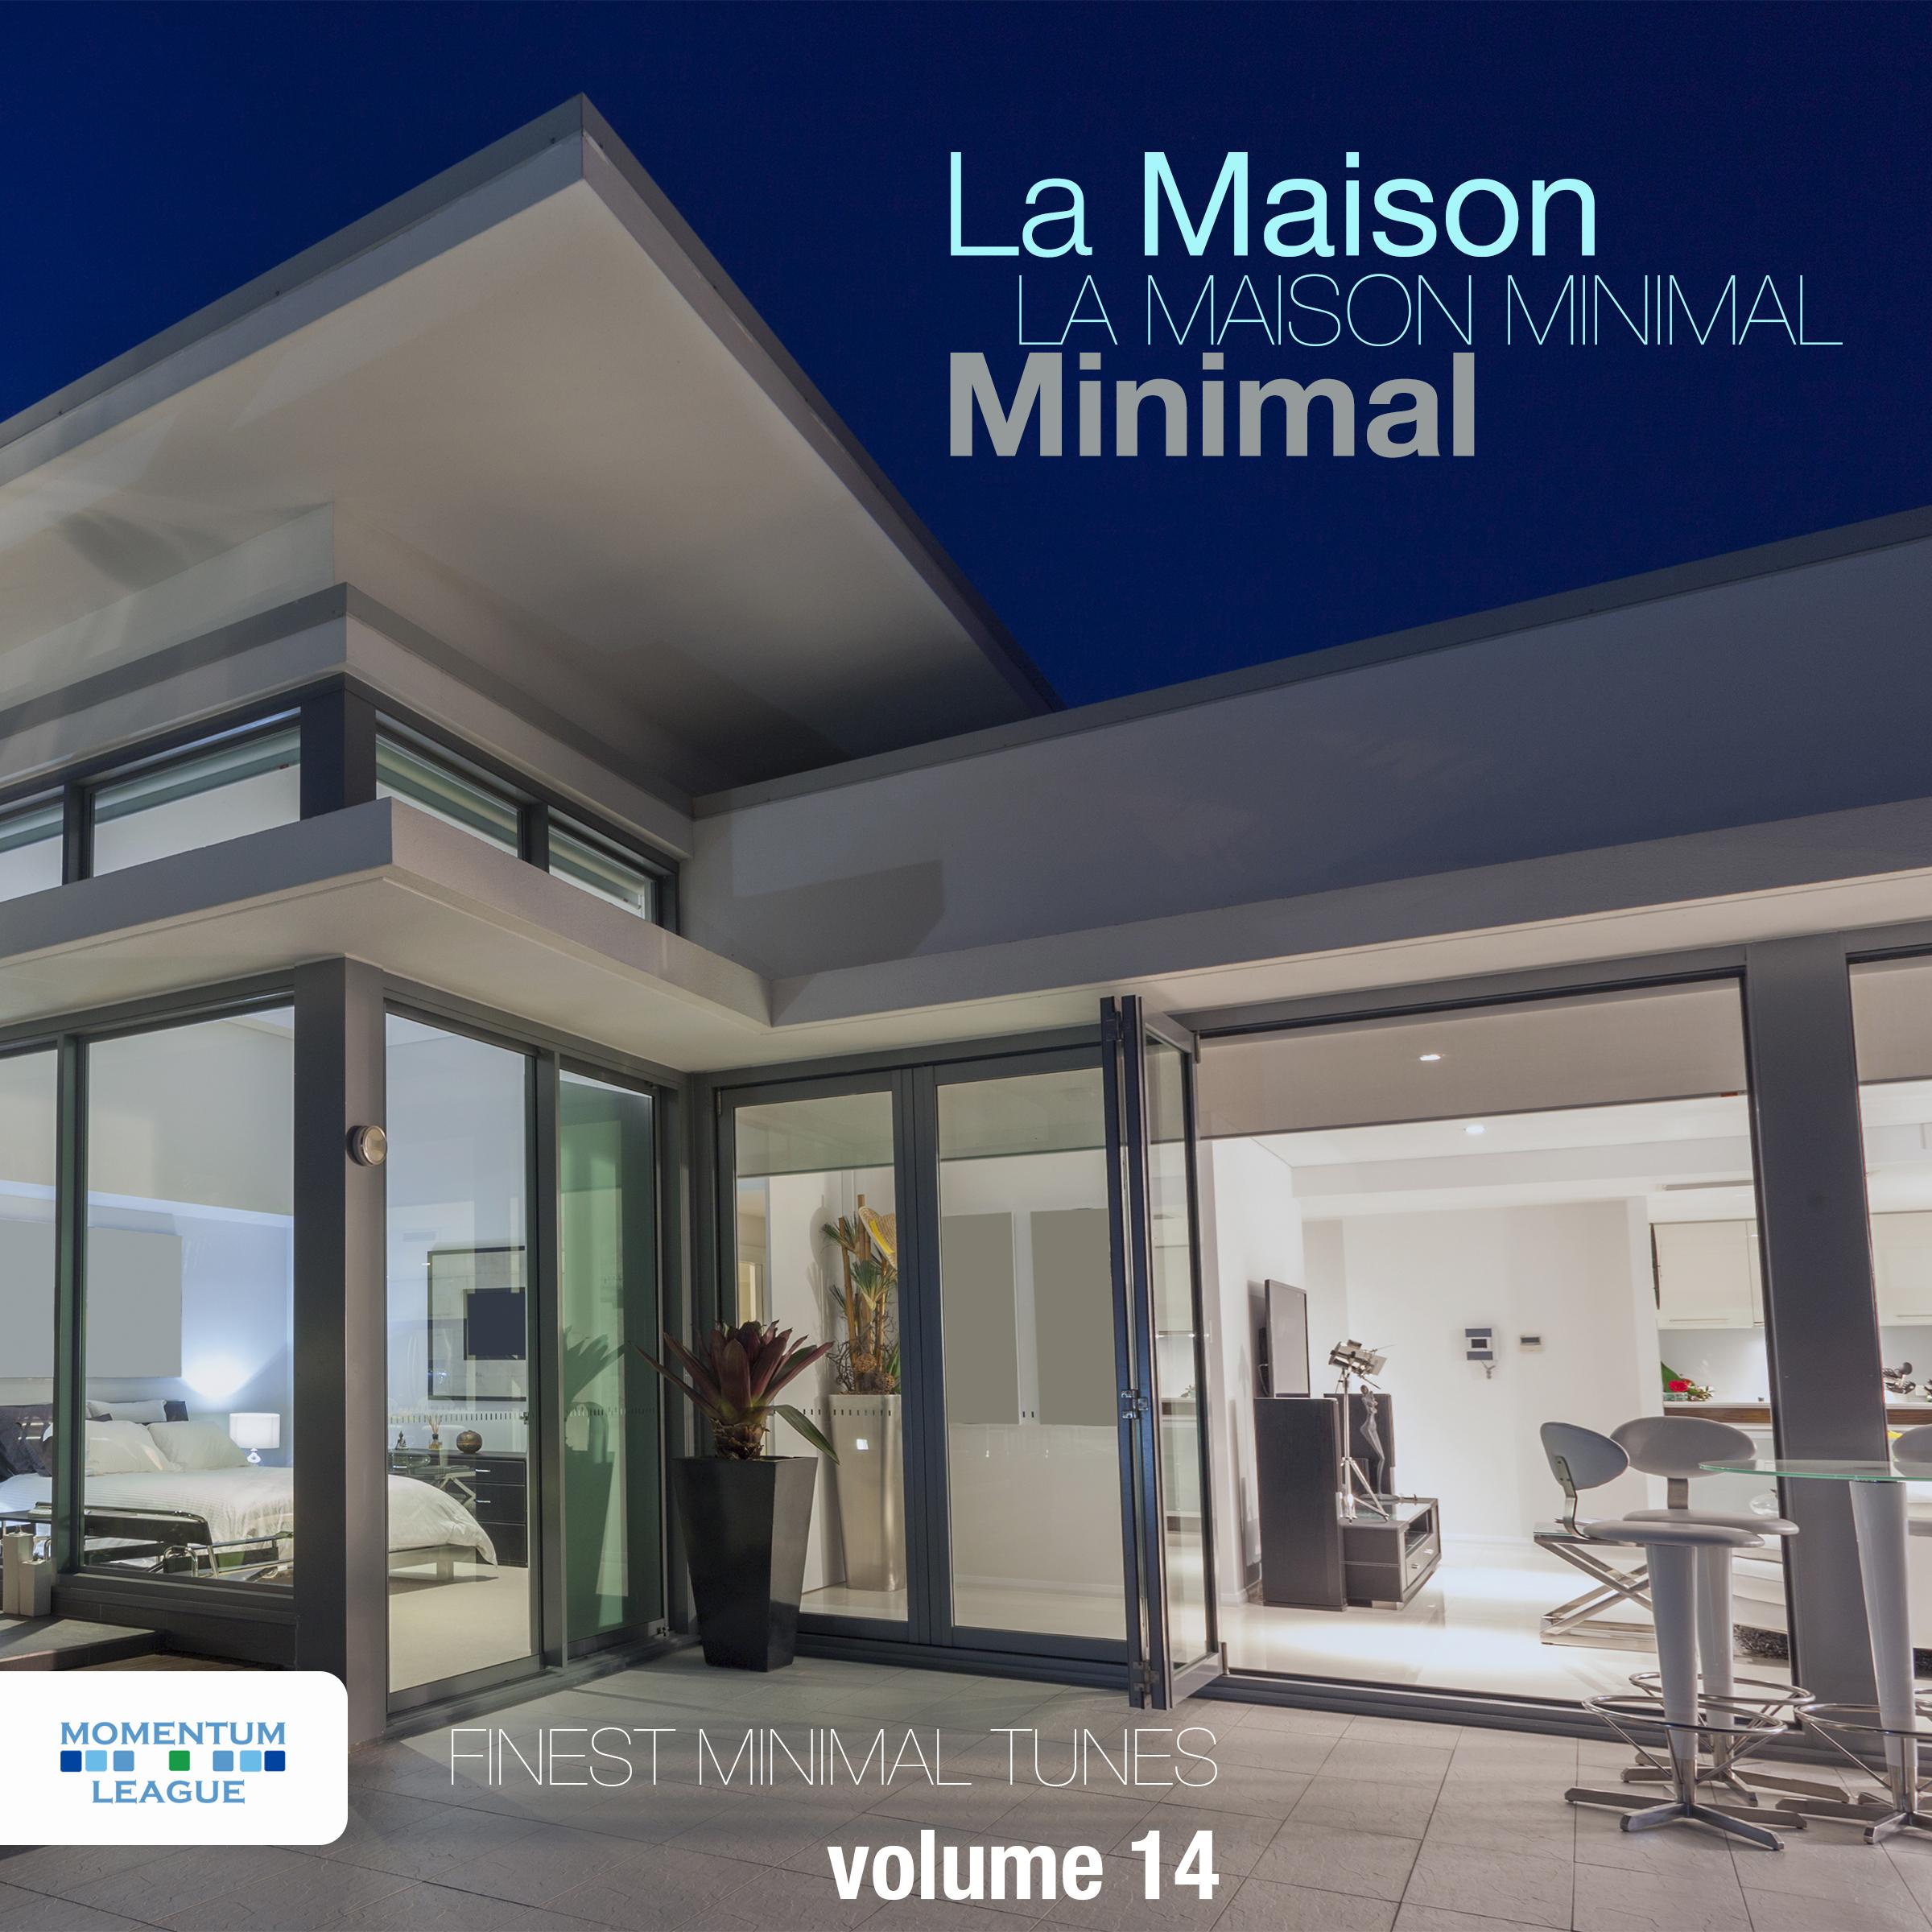 La Maison Minimal, Vol. 14 - Finest Minimal Tunes